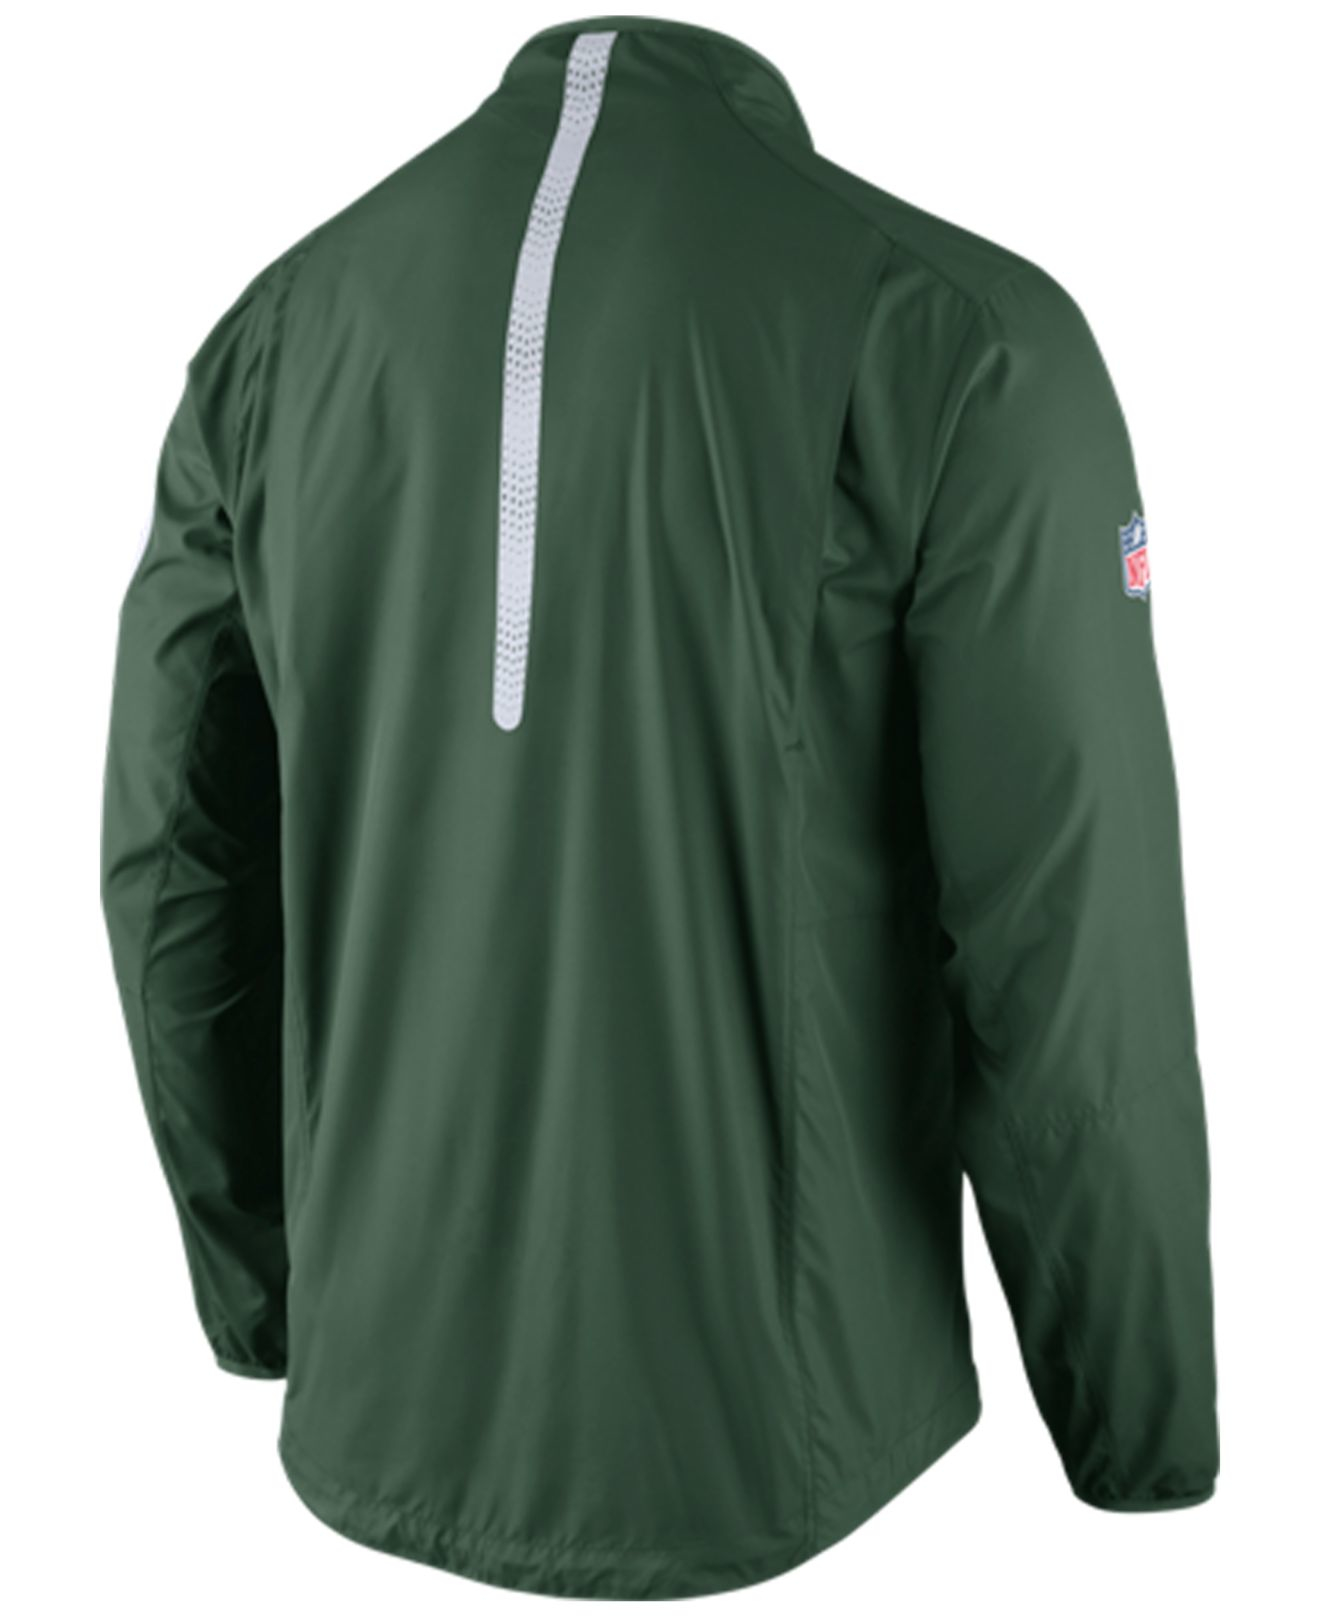 Lyst - Nike Men's New York Jets Lockdown Half-zip Jacket in Green for Men